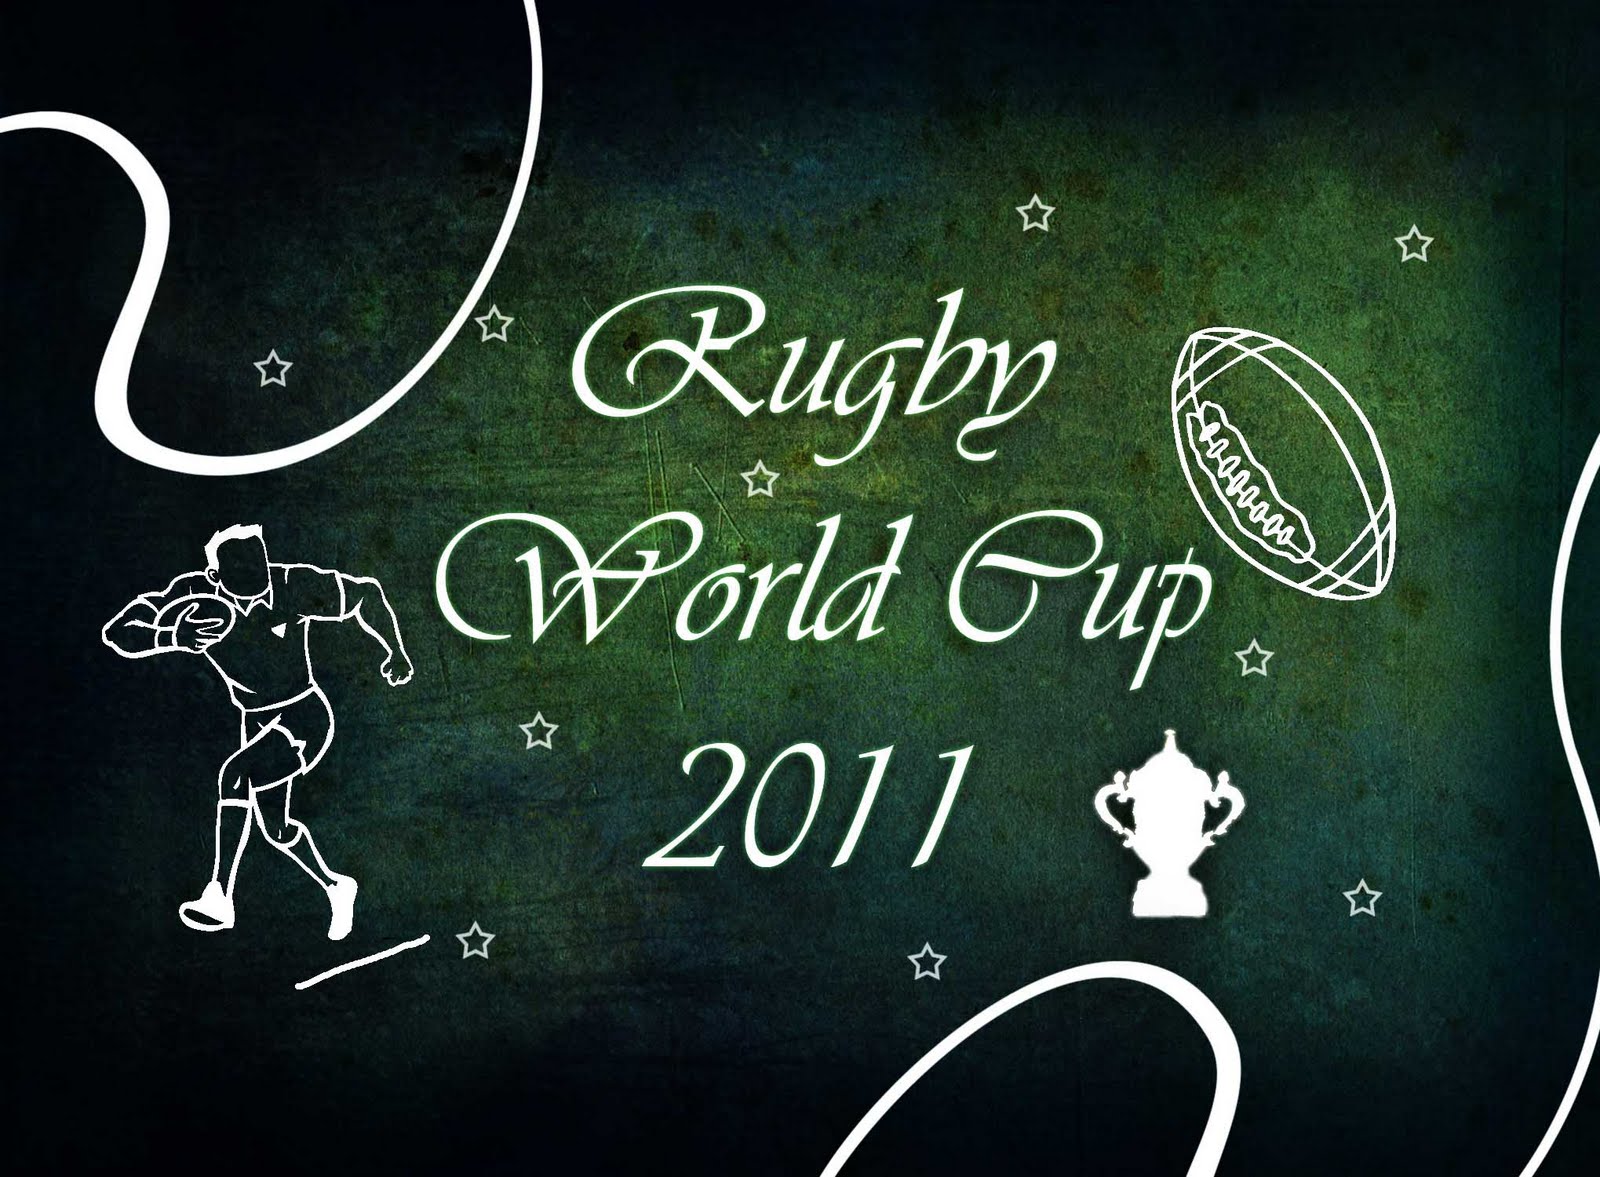 http://4.bp.blogspot.com/-zMbNTo9Zkf4/Te4MOzxlOlI/AAAAAAAAAKM/fz6R8X2U1vc/s1600/rugby_world_cup_2011.jpg